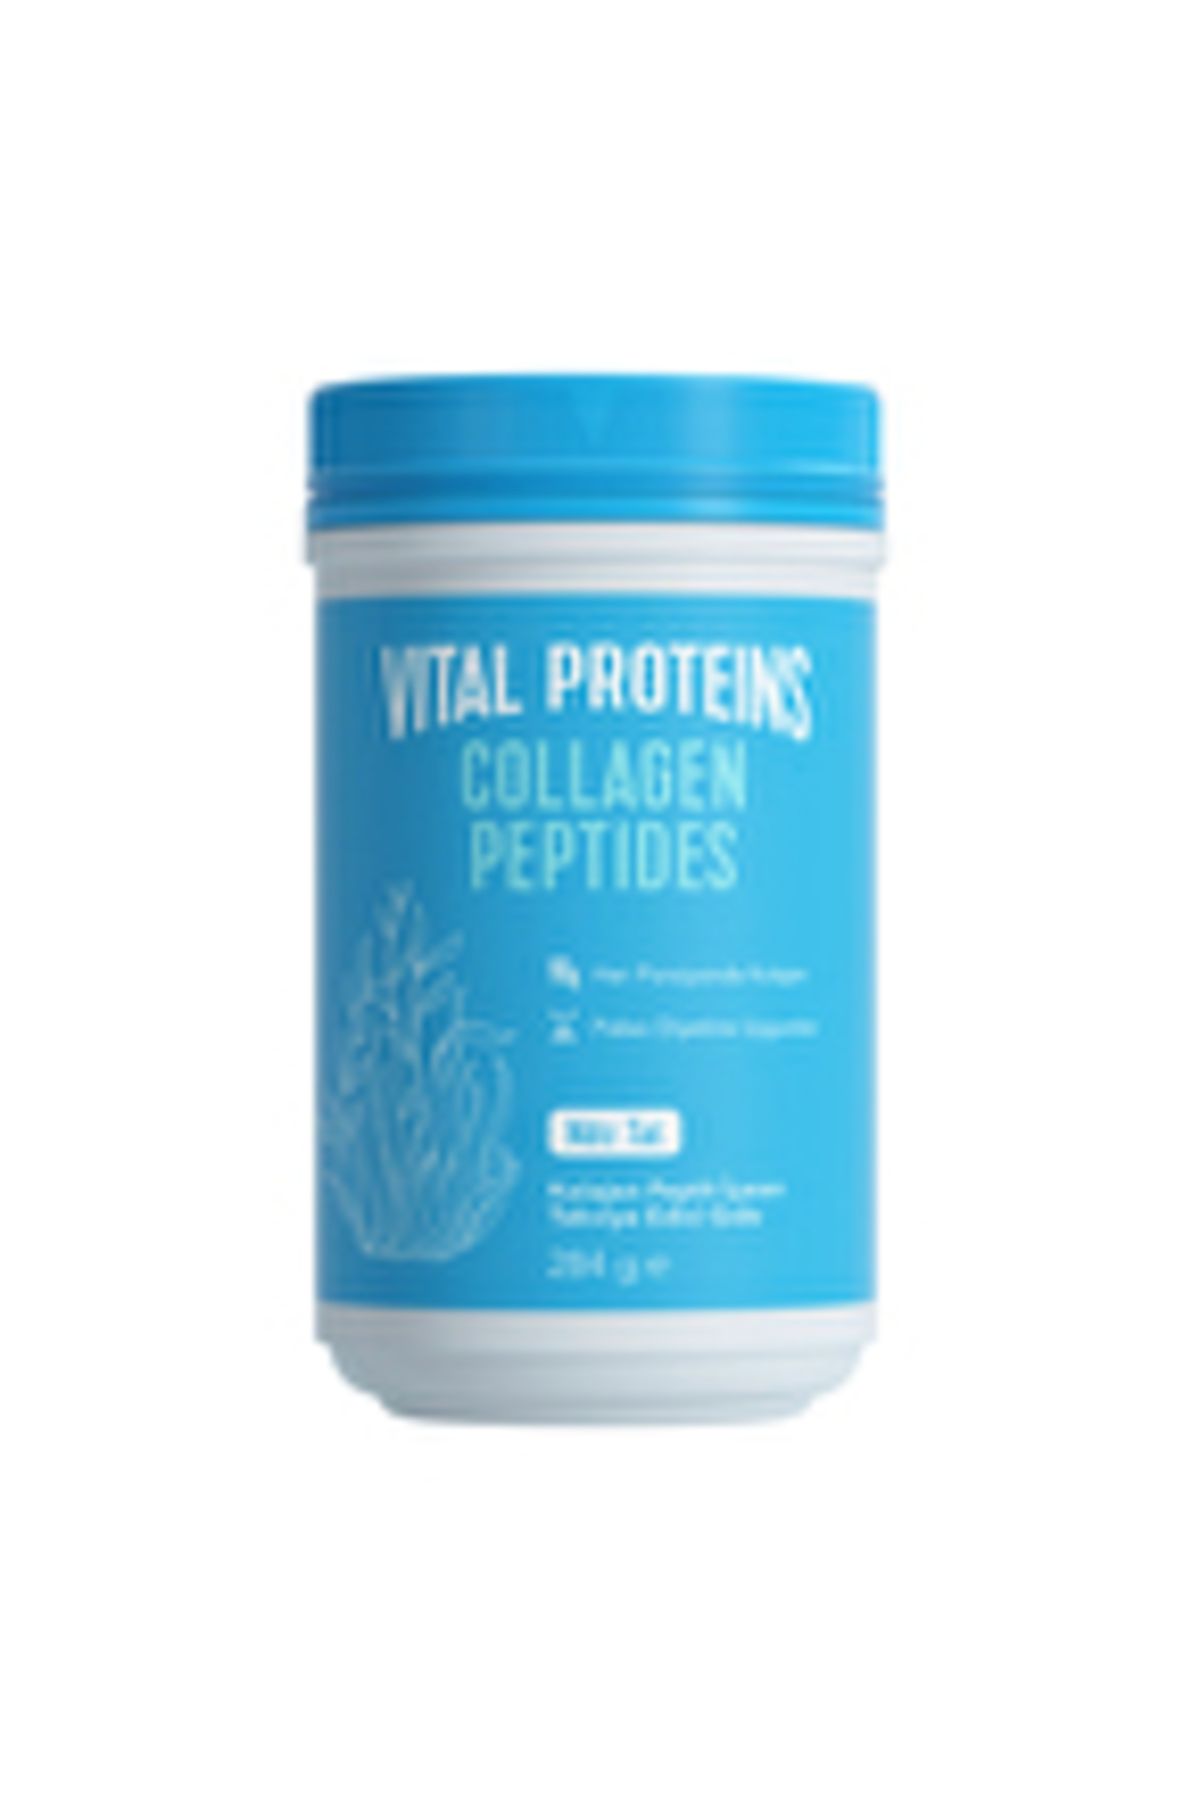 Vital Proteins Collagen Peptides 284 Gr Nötr Tat ( 1 ADET )